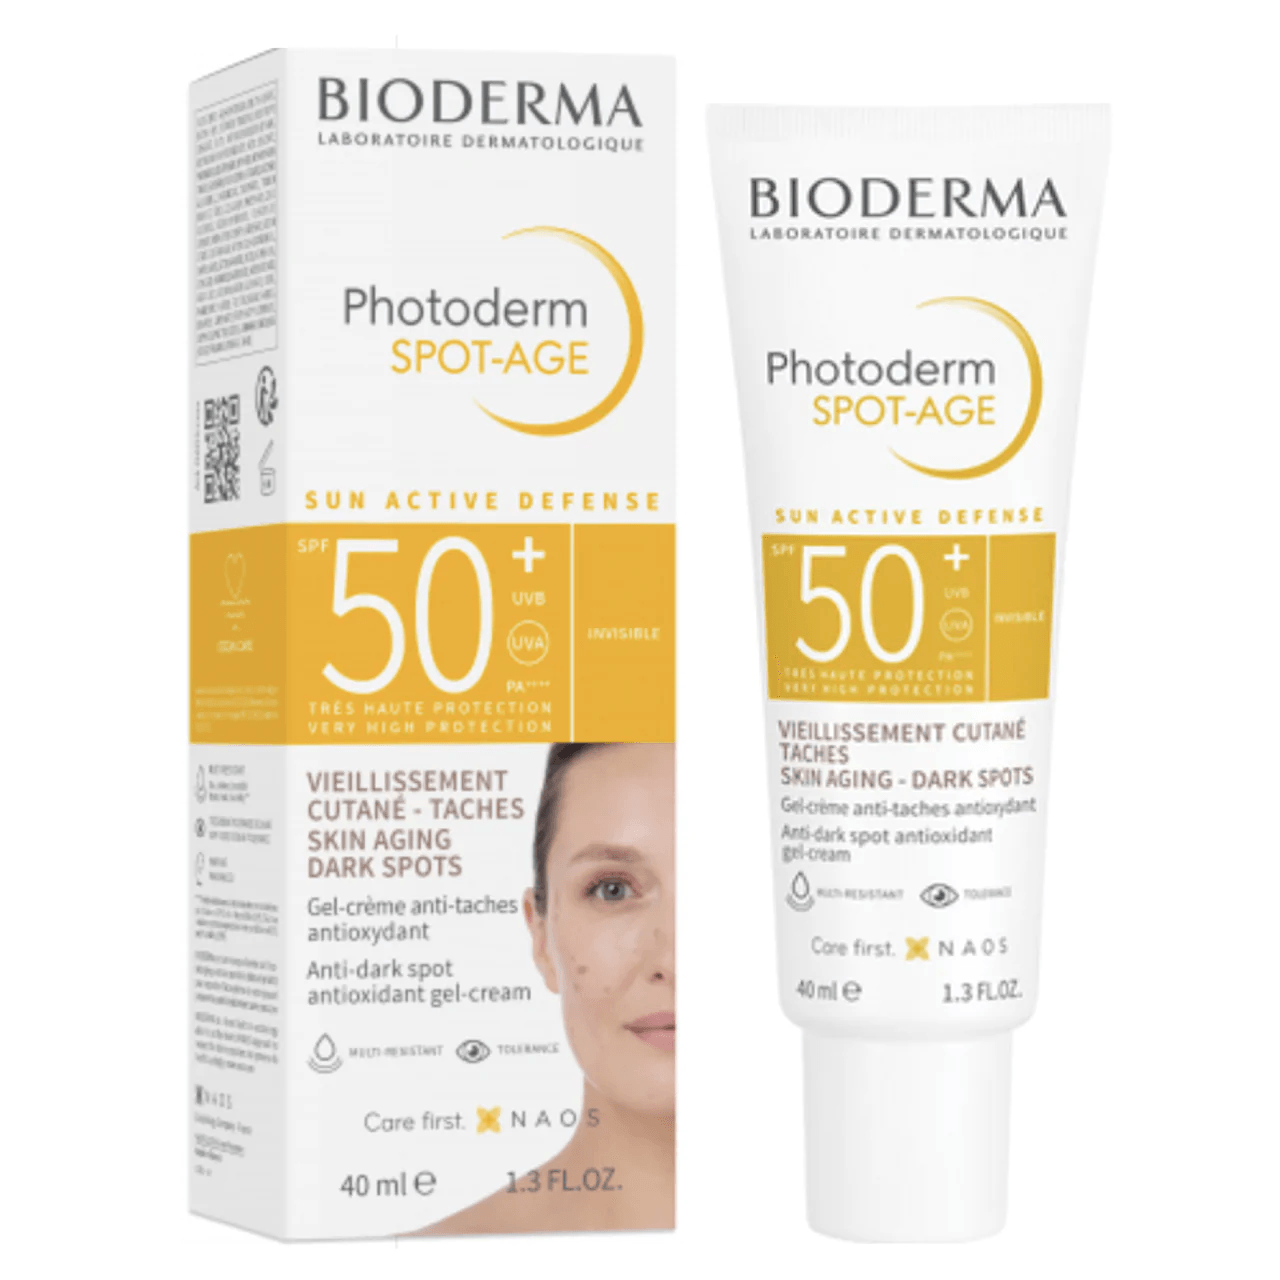 Bioderma - Photoderm spot-age SPF 50 + - ORAS OFFICIAL